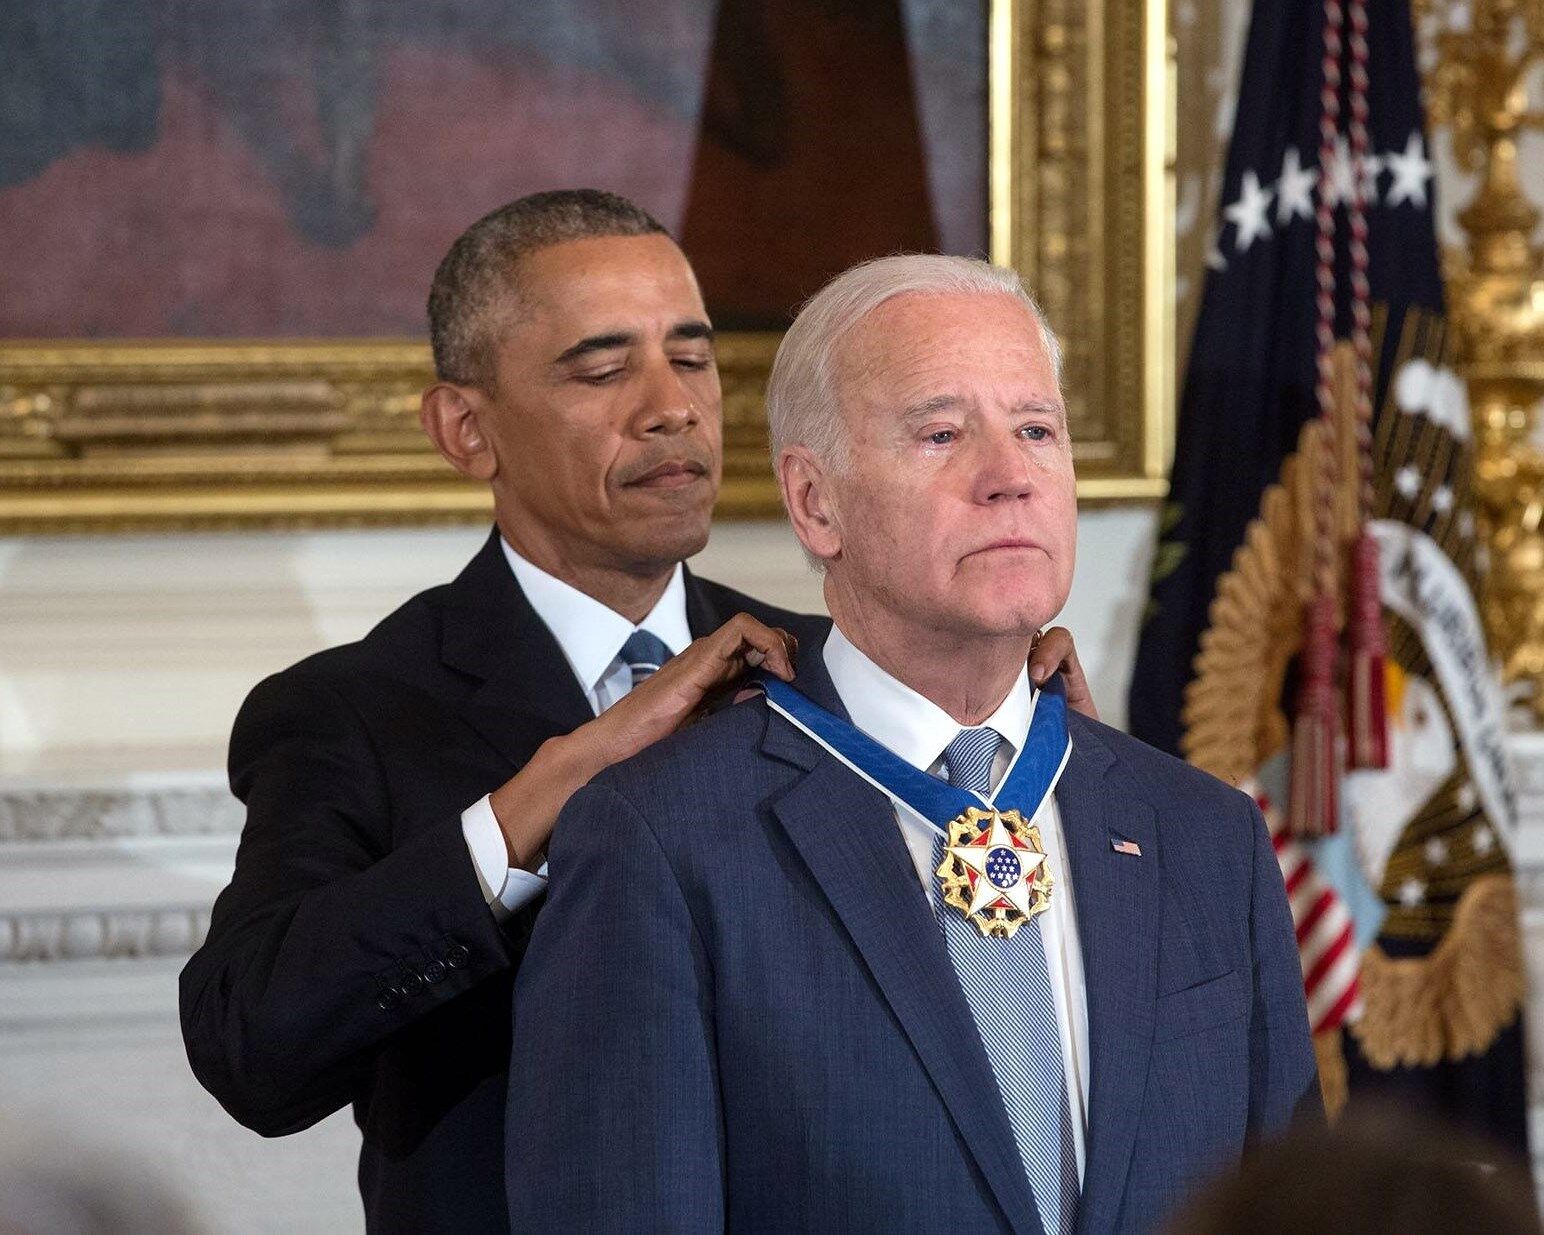 Barack Obama Presidental Medal of Freedom to Joe Biden 8 x 10 Photo Picture